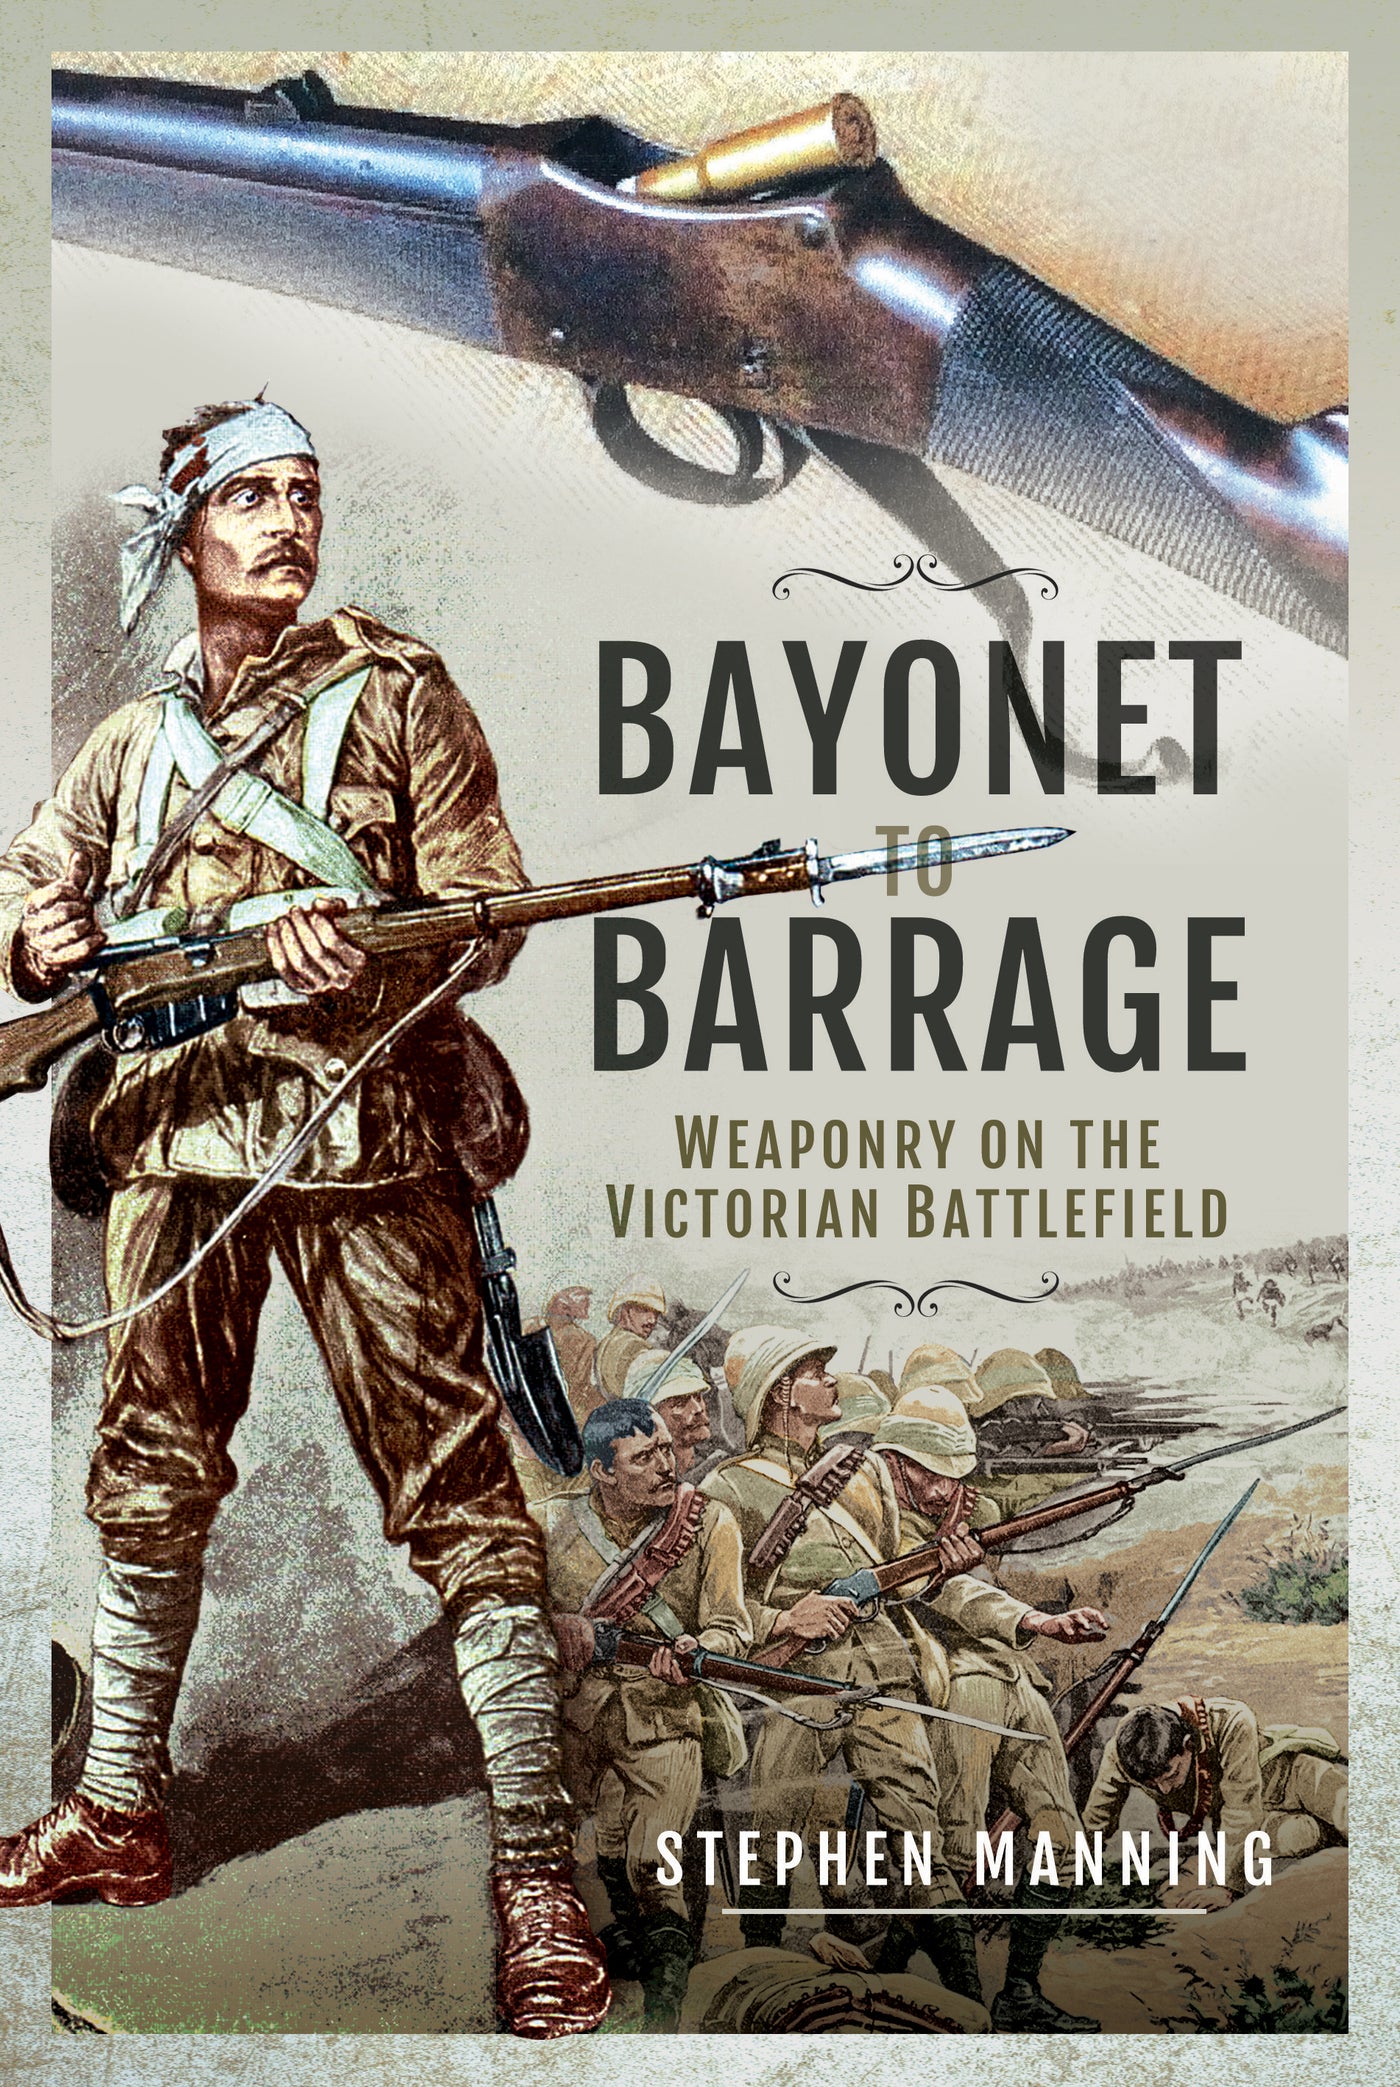 Bayonet to Barrage